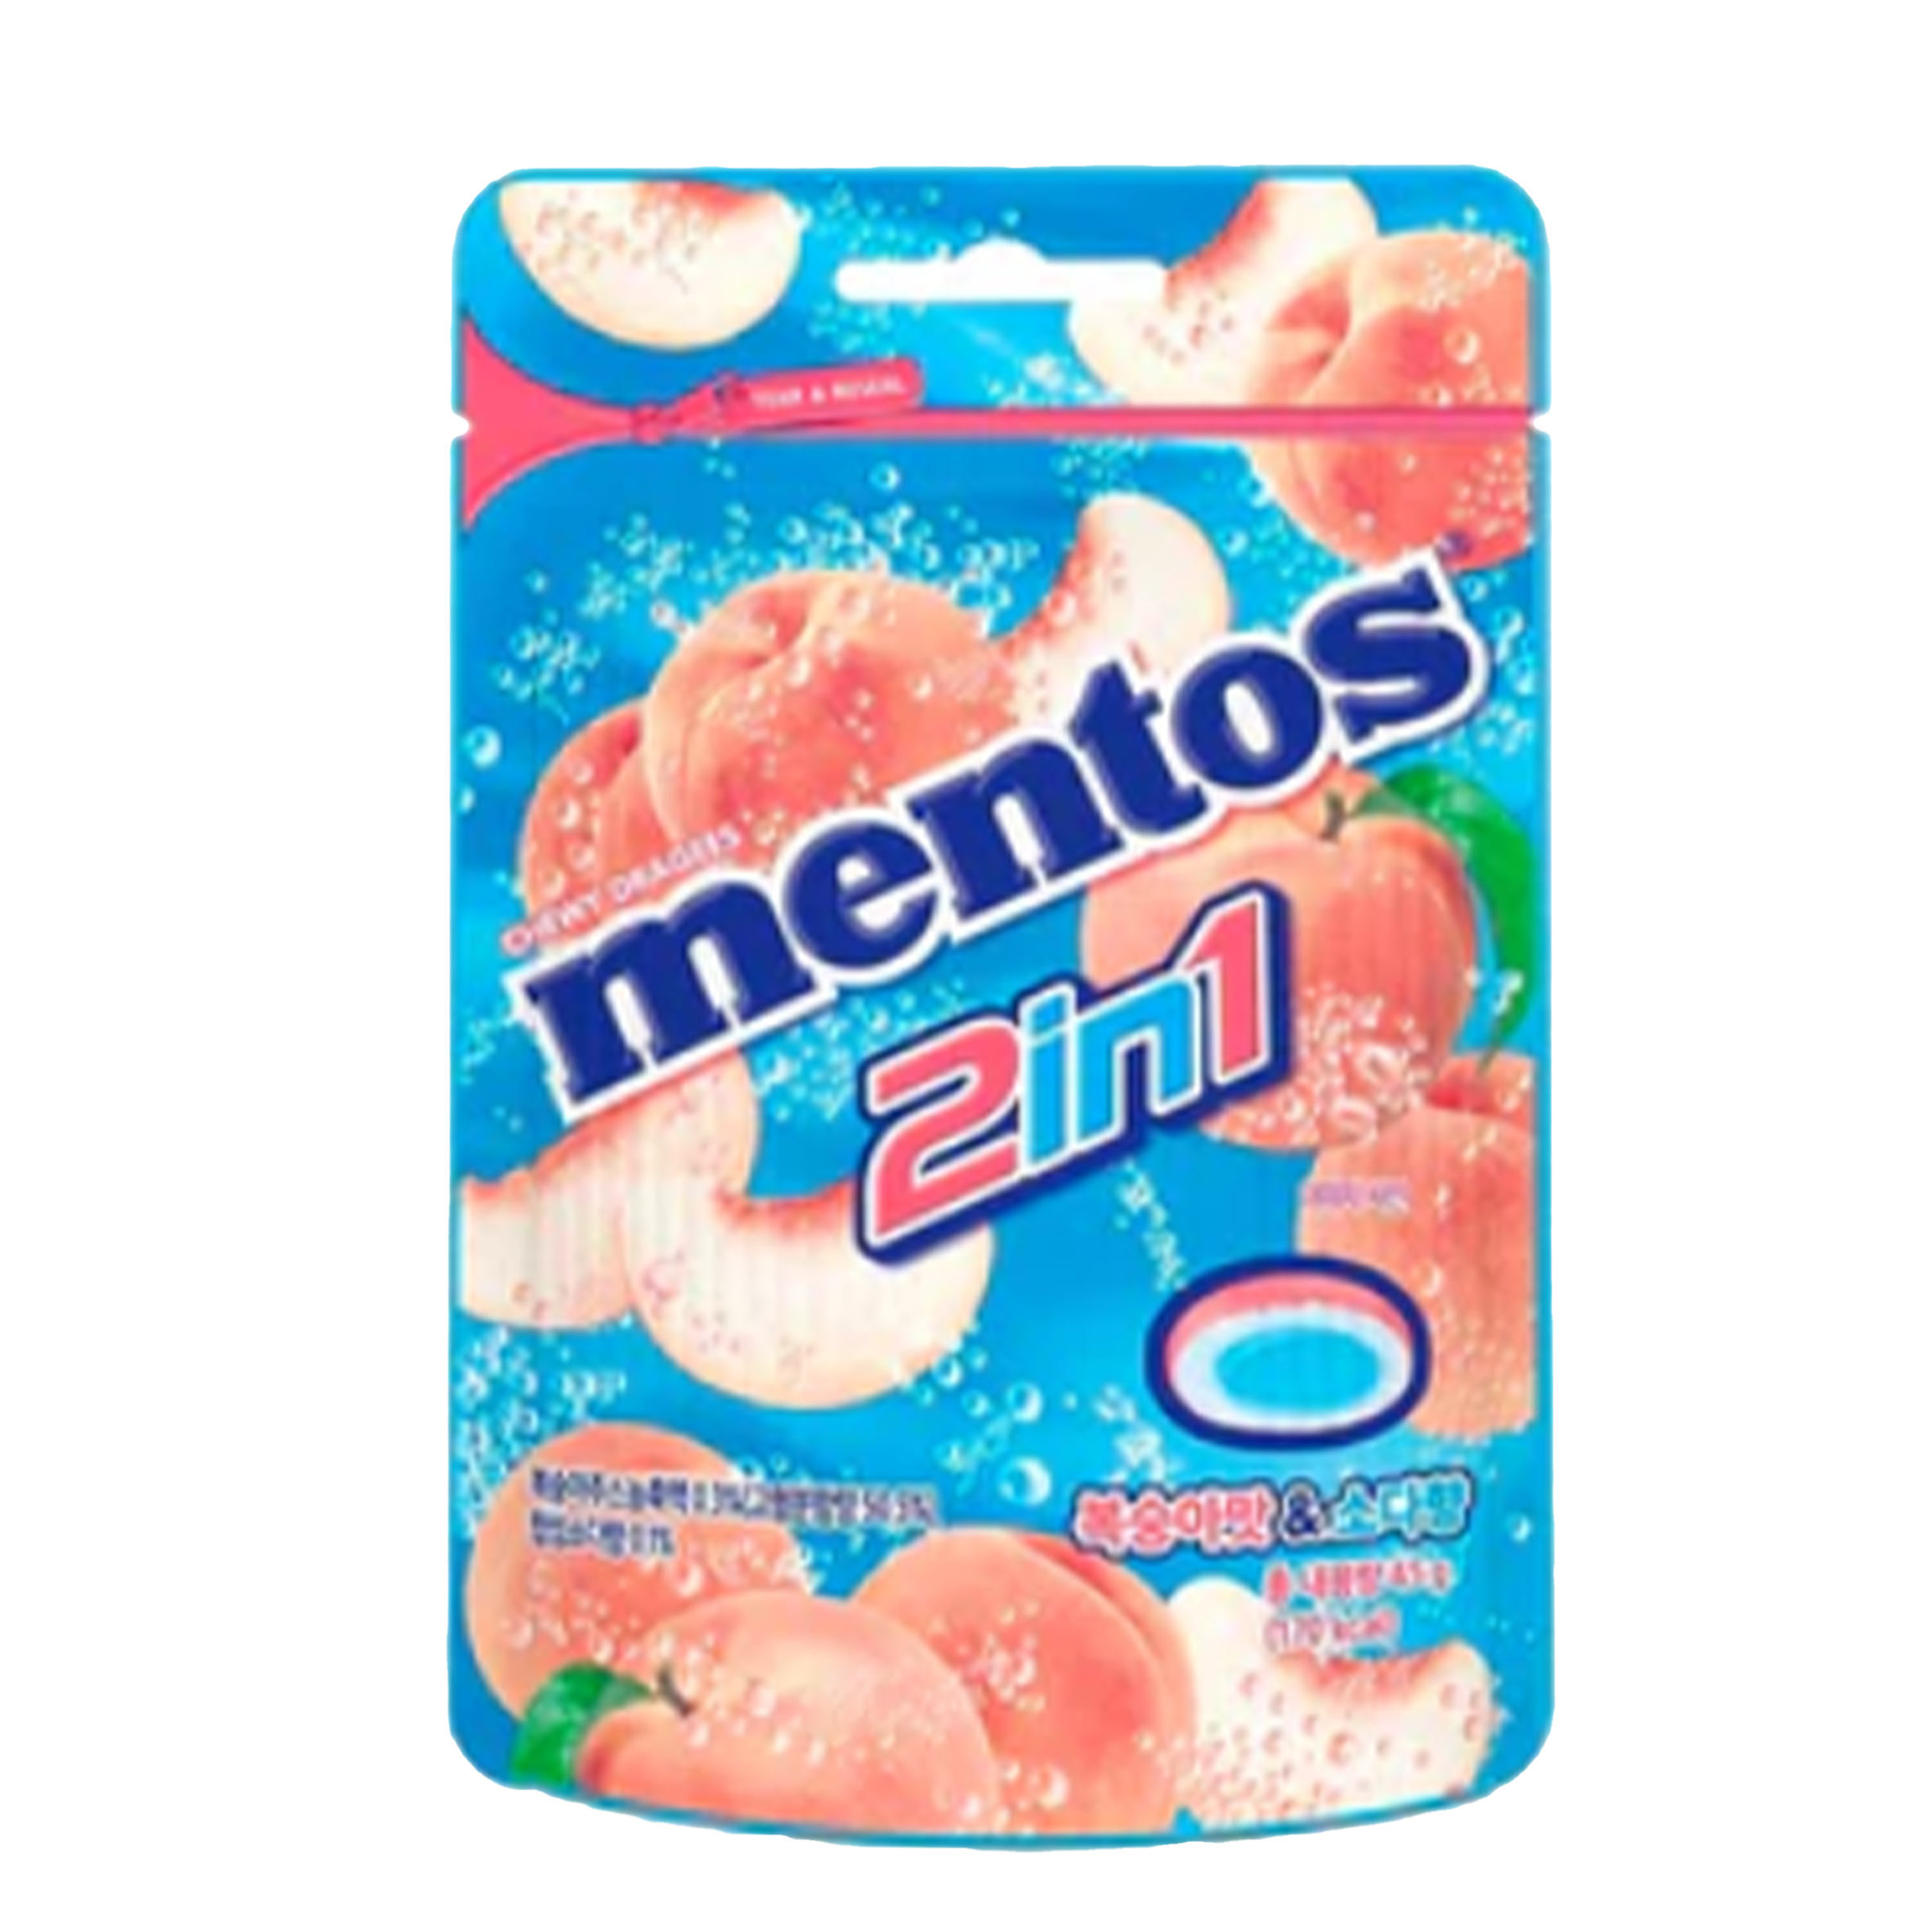 Mentos Duo 2 in 1 - Peach & Soda (Korea)